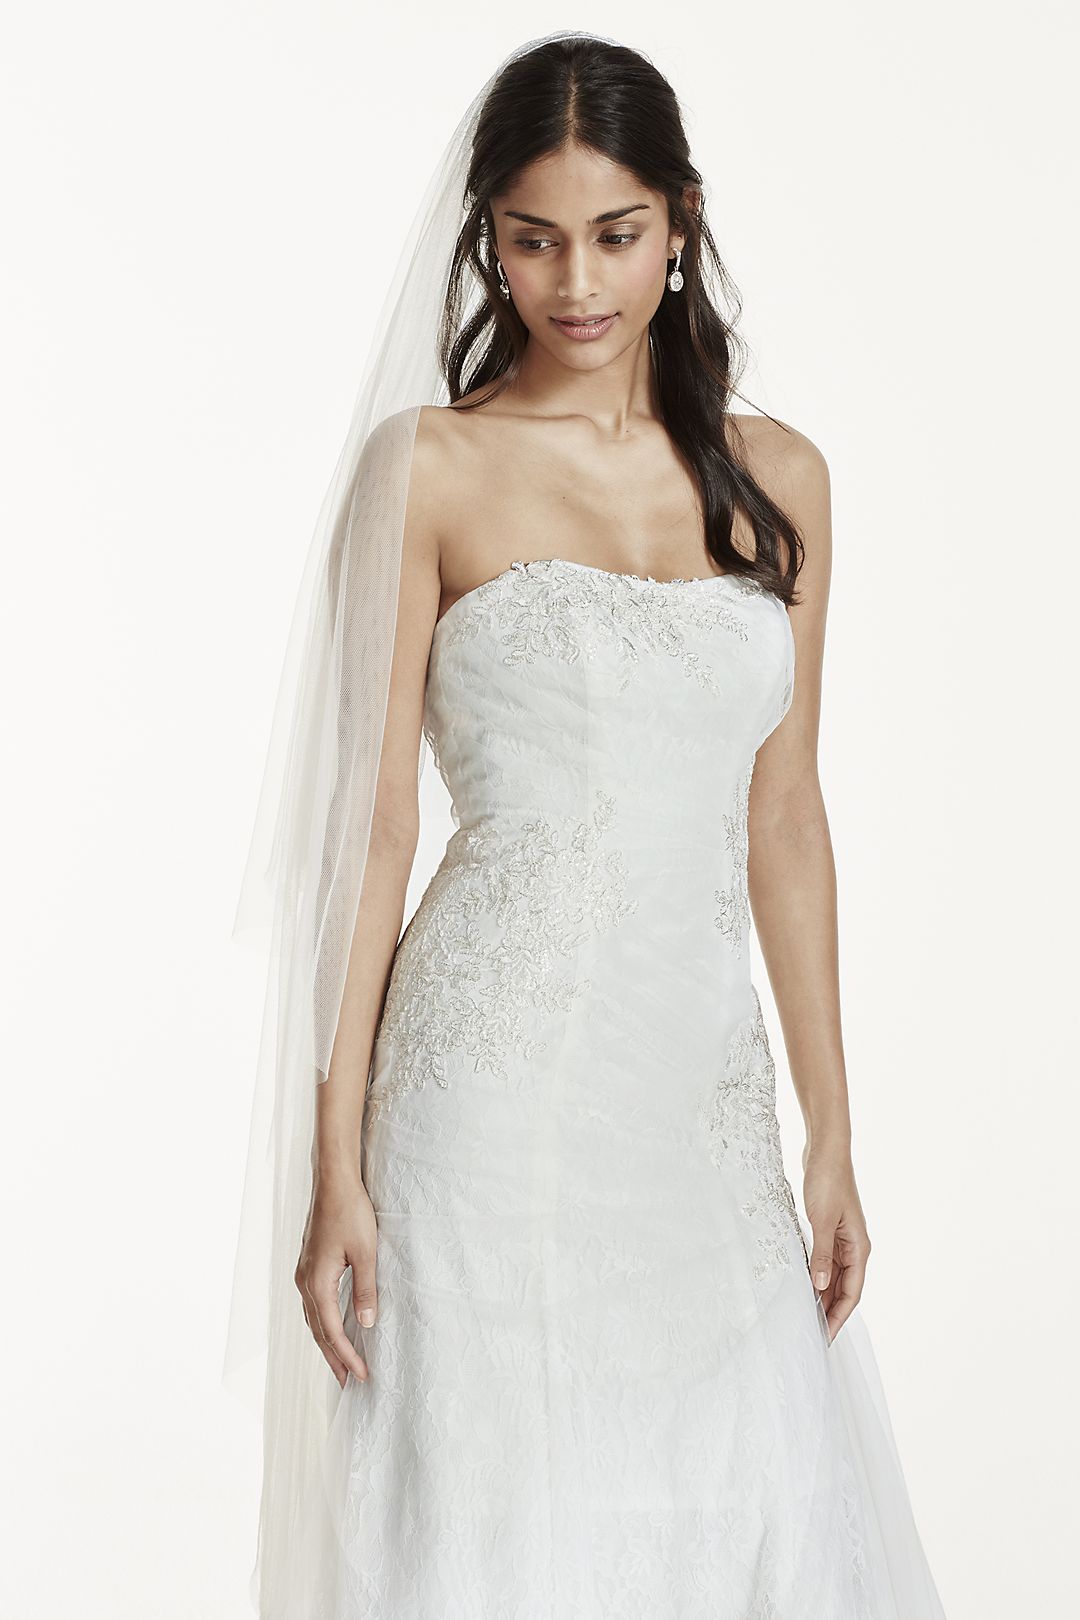 Tulle Over Lace Mermaid Wedding Dress Image 4